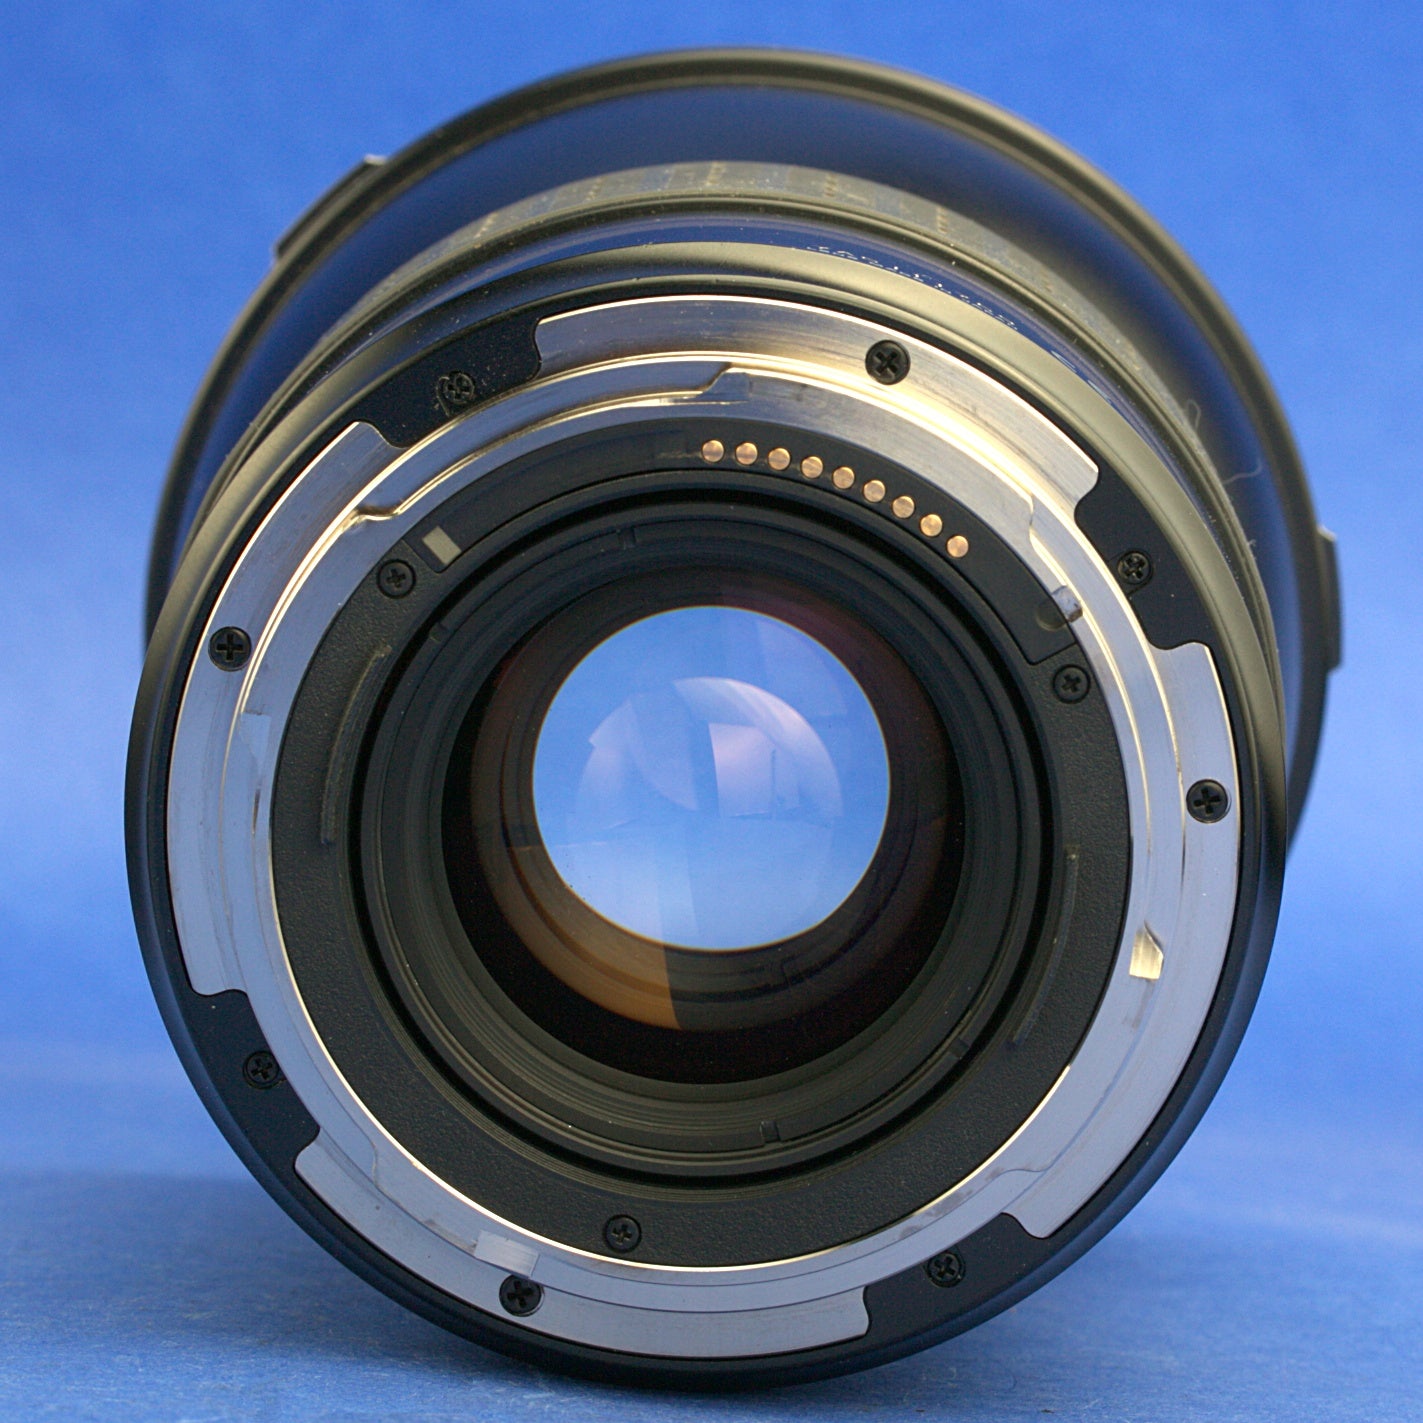 Hasselblad HC 35mm 3.5 Lens